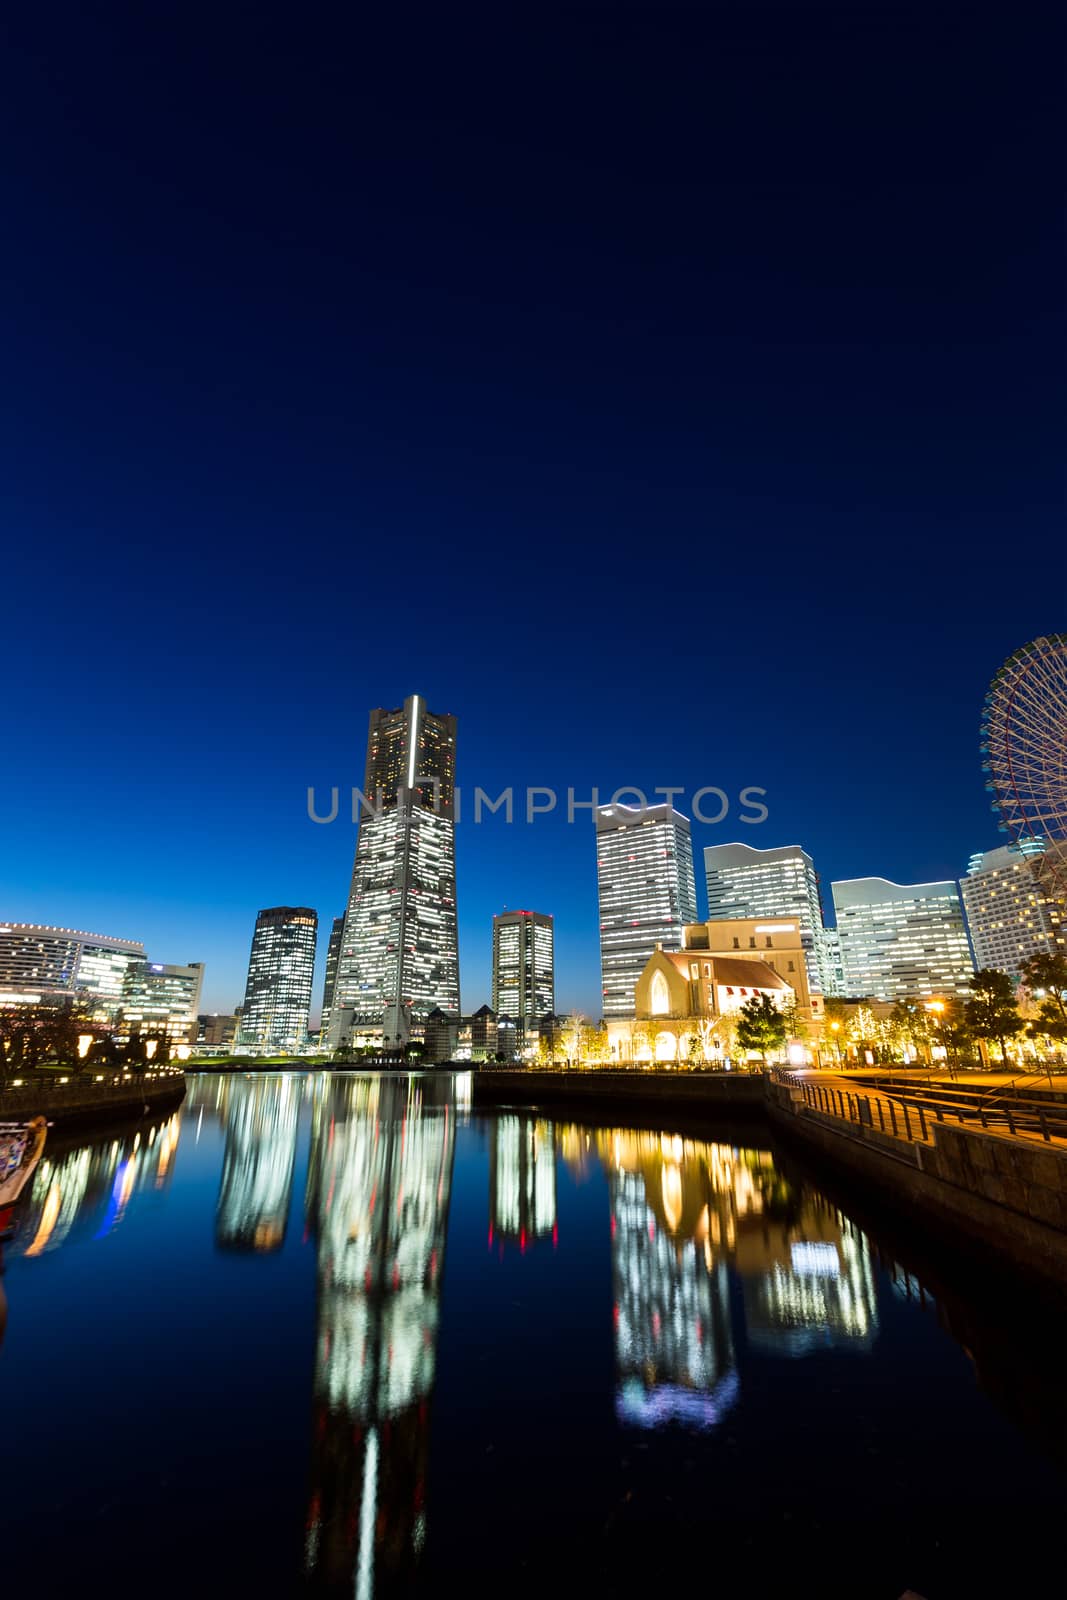 Yokohama city at night by leungchopan